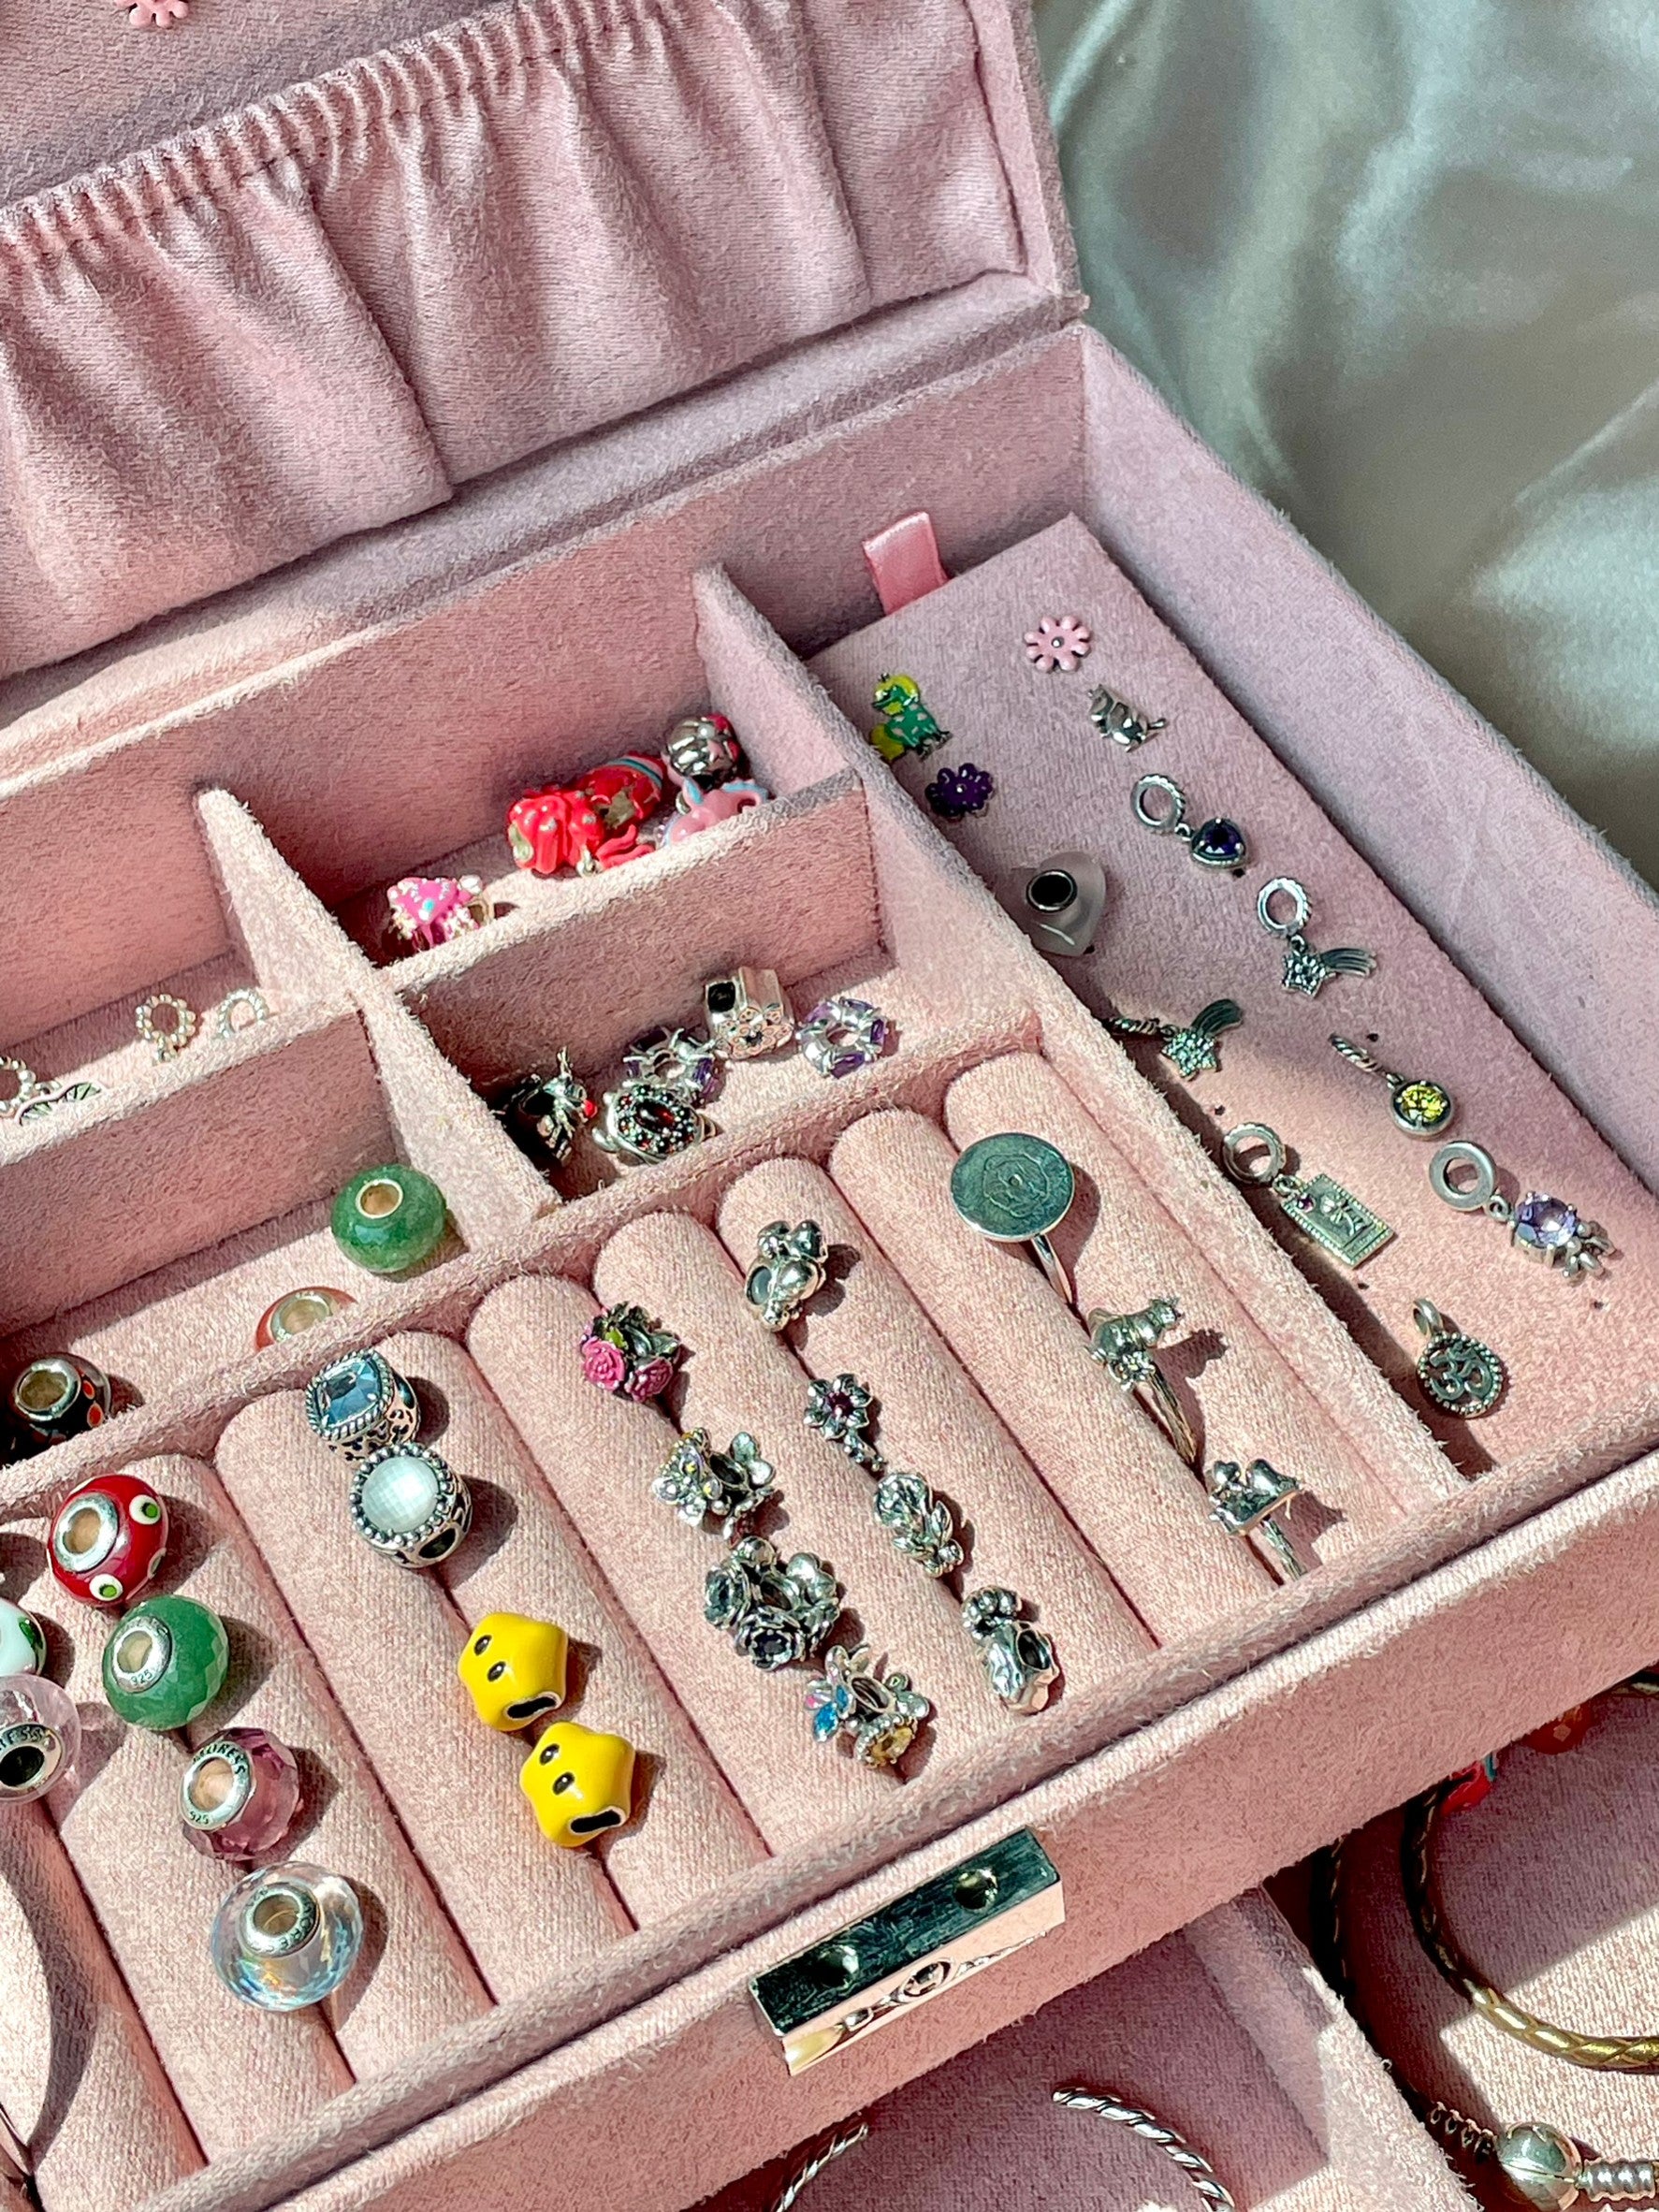 Pastel Pink Jewelry Box - Free engravings